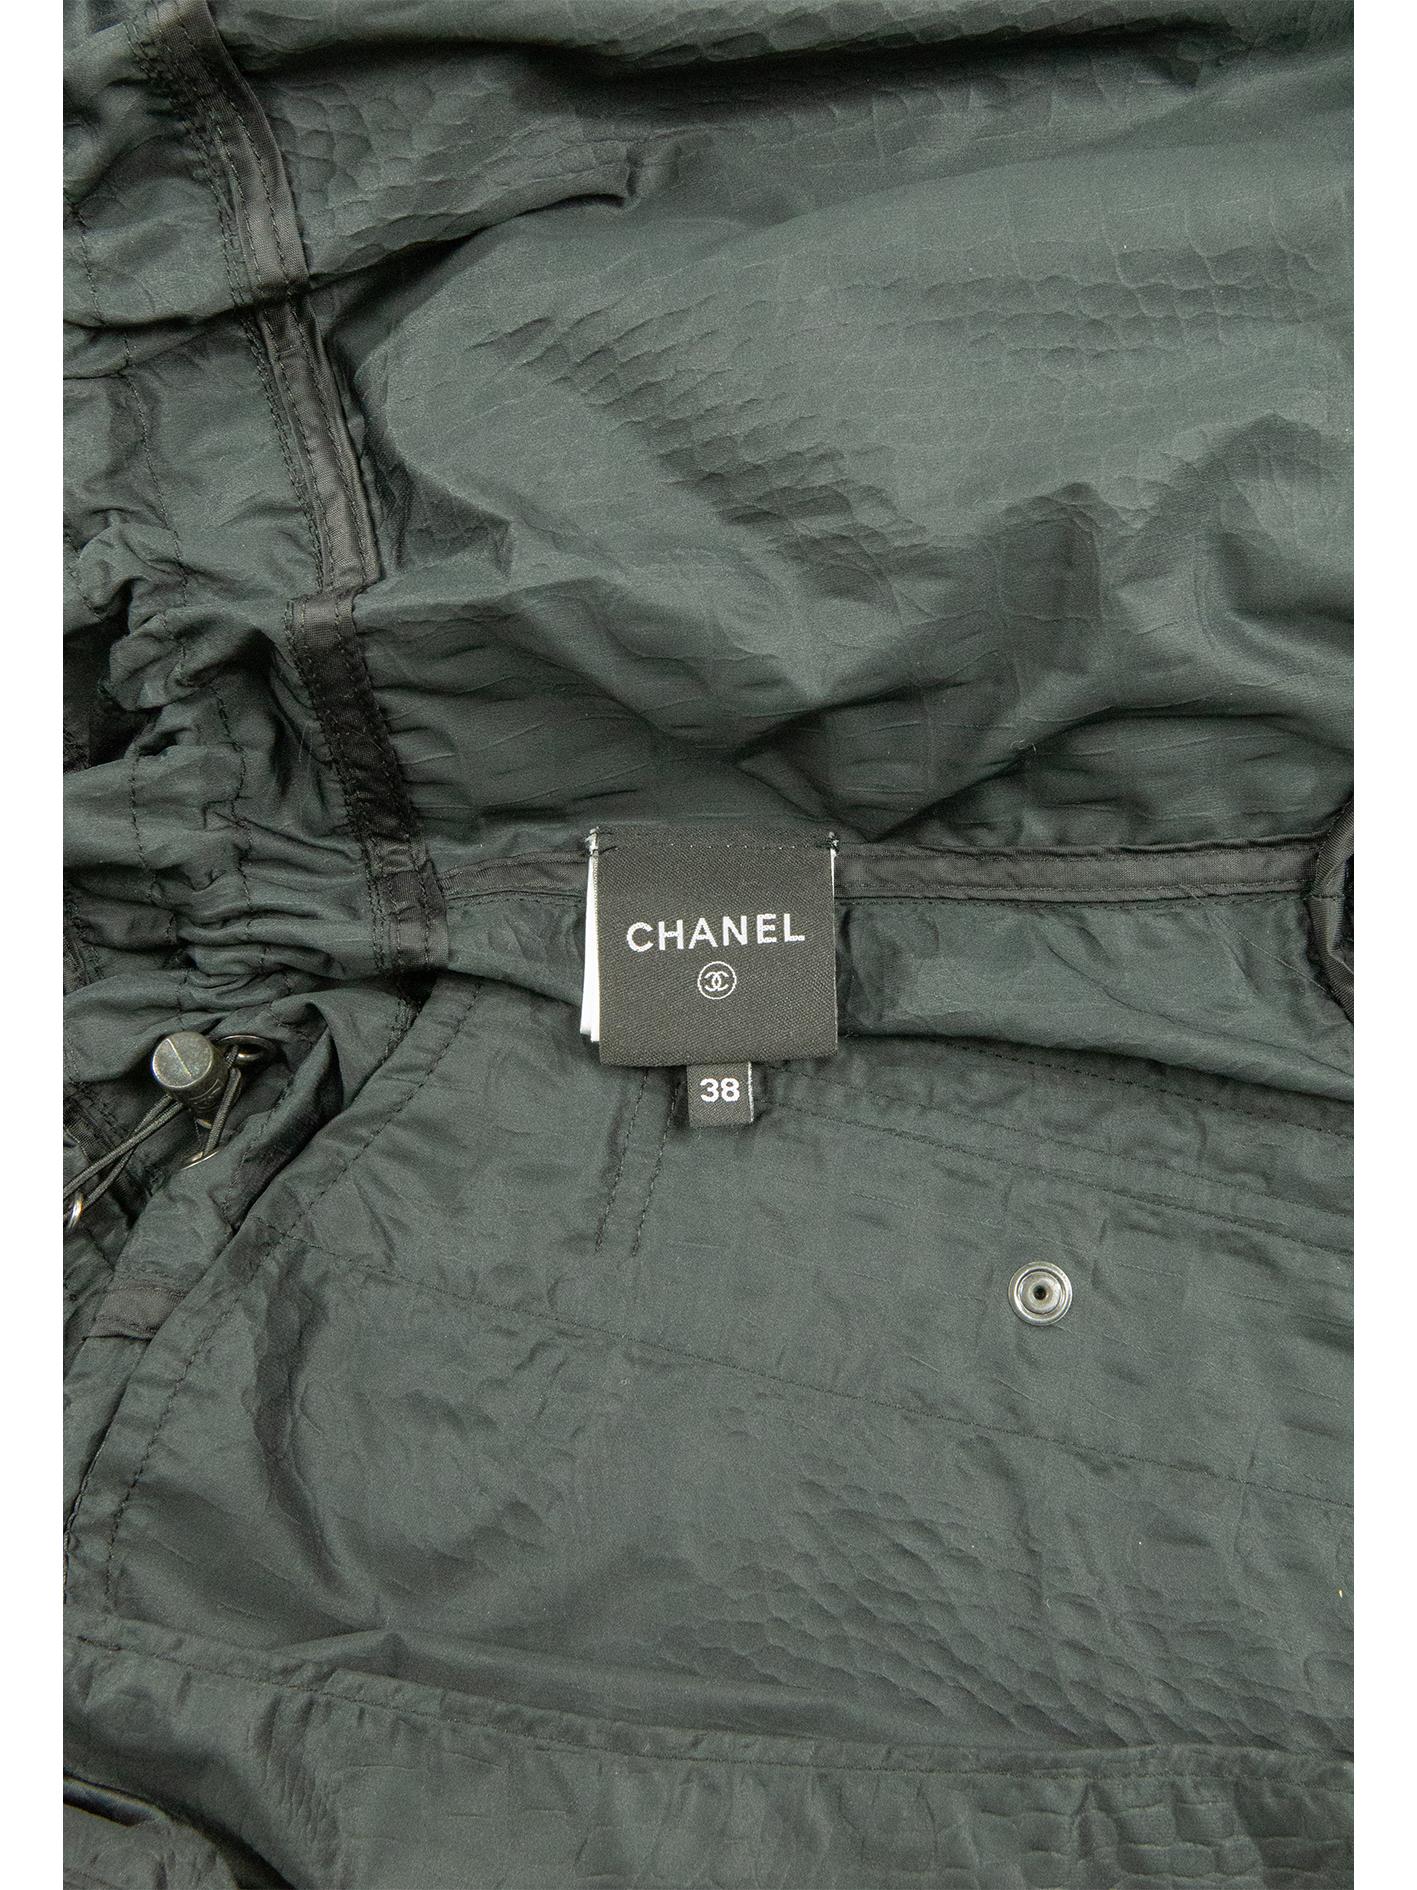 Spring 2009 Chanel Alligator Print Rain Coat For Sale 3